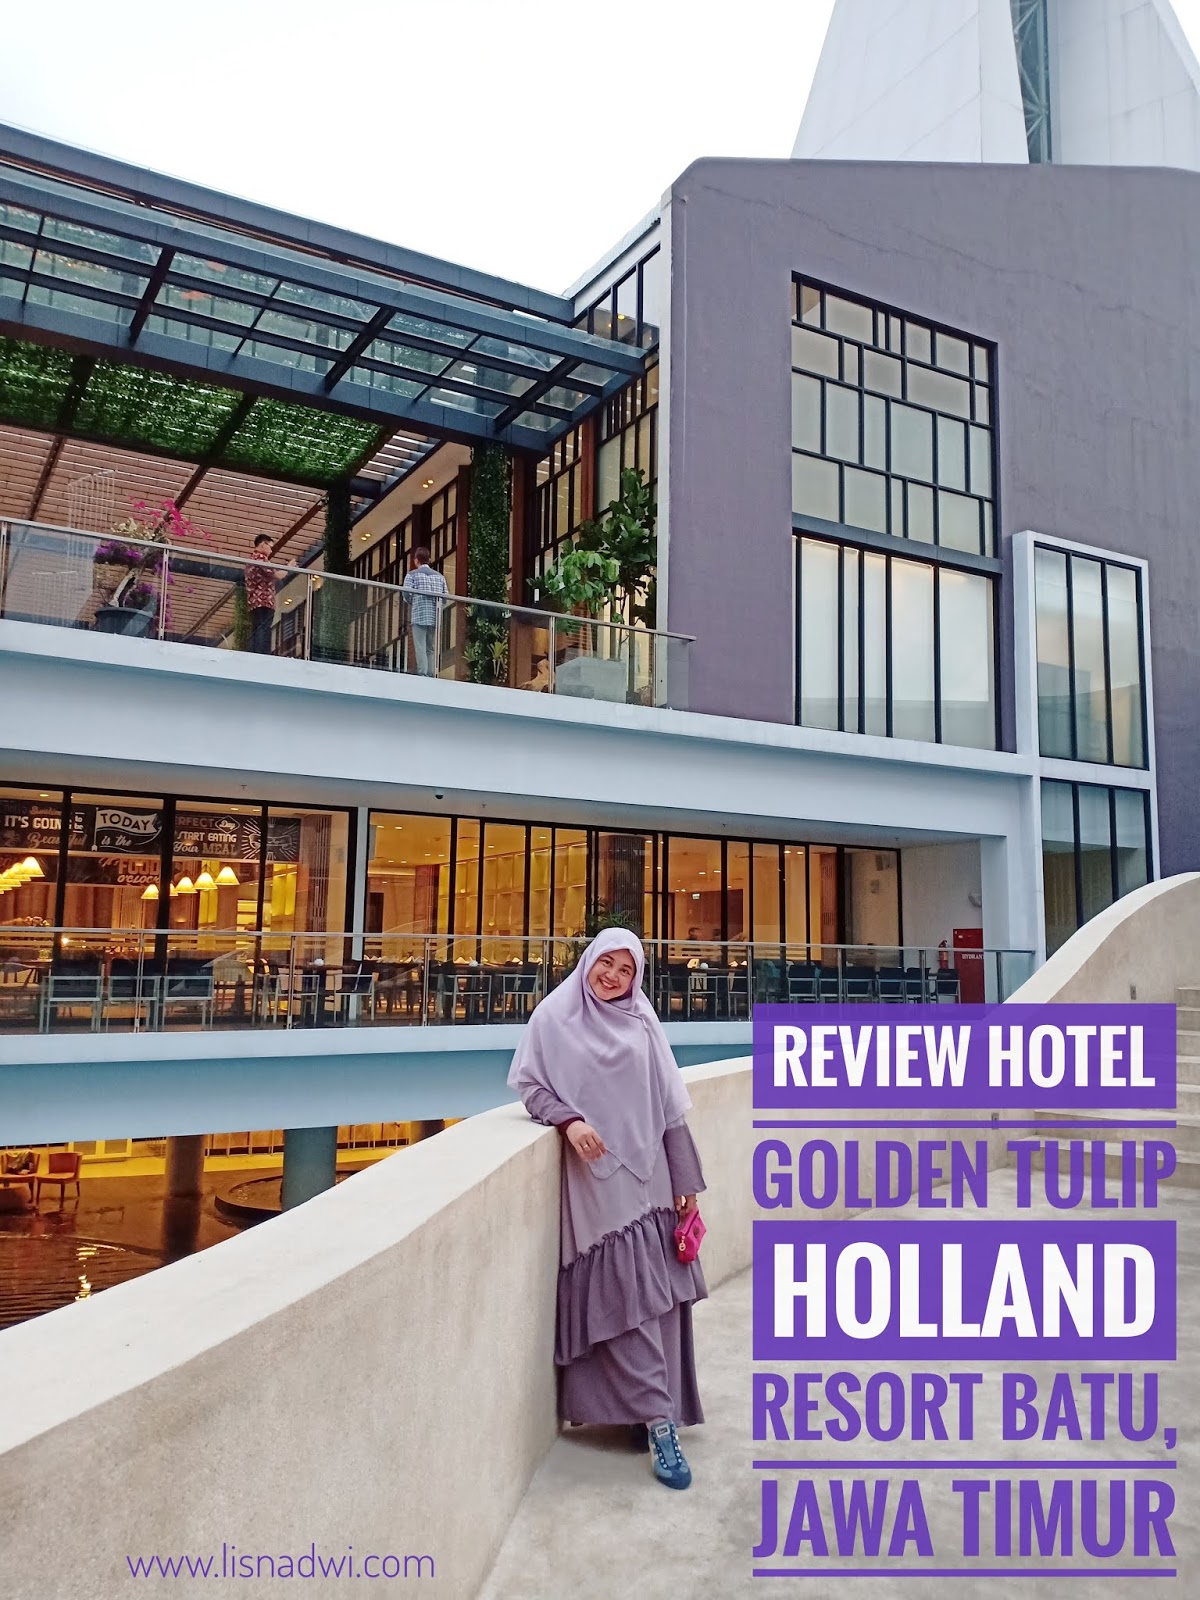 Review Hotel  Golden  Tulip  Holland Resort Batu Jawa Timur 